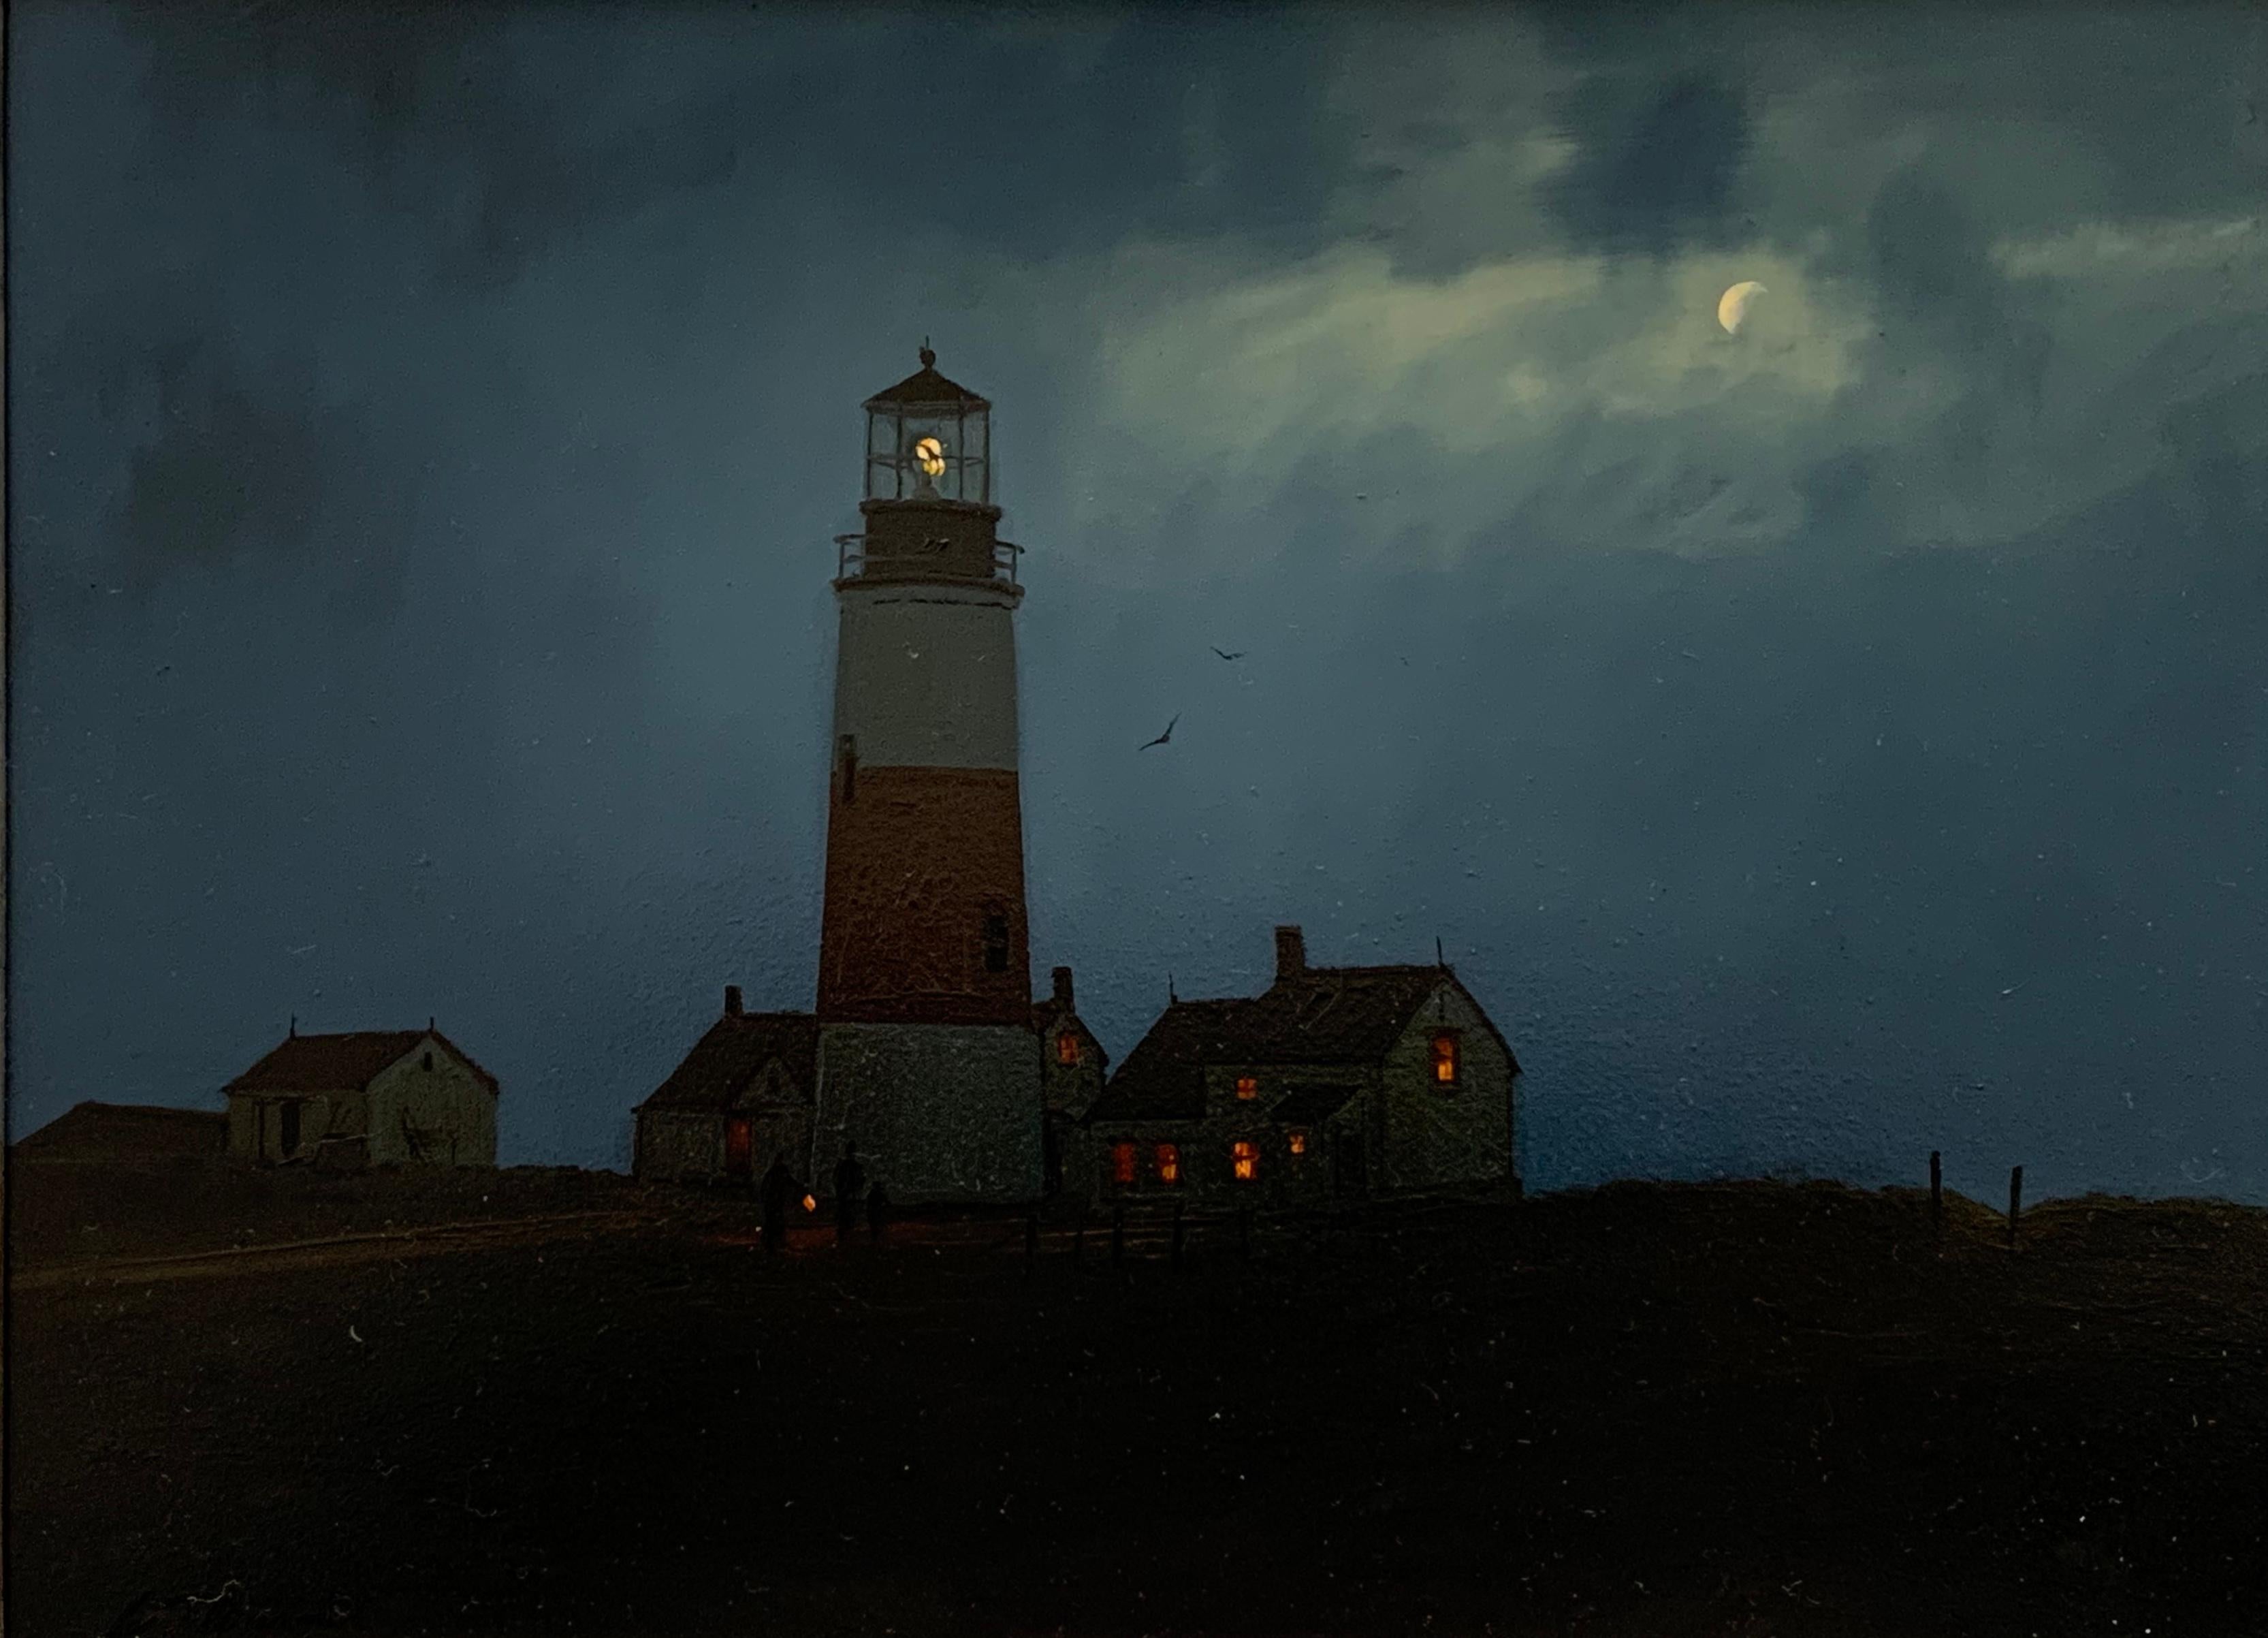 William R Davis Landscape Painting - Stormy Night at Sankaty Light, nocturnal landscape by William Davis